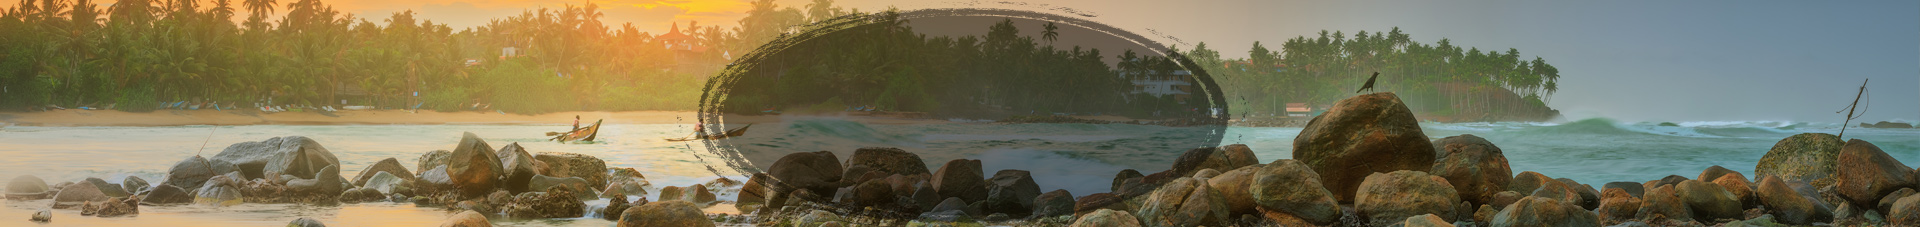 tropical-beach-sunset,-Sri-Lanka.jpg